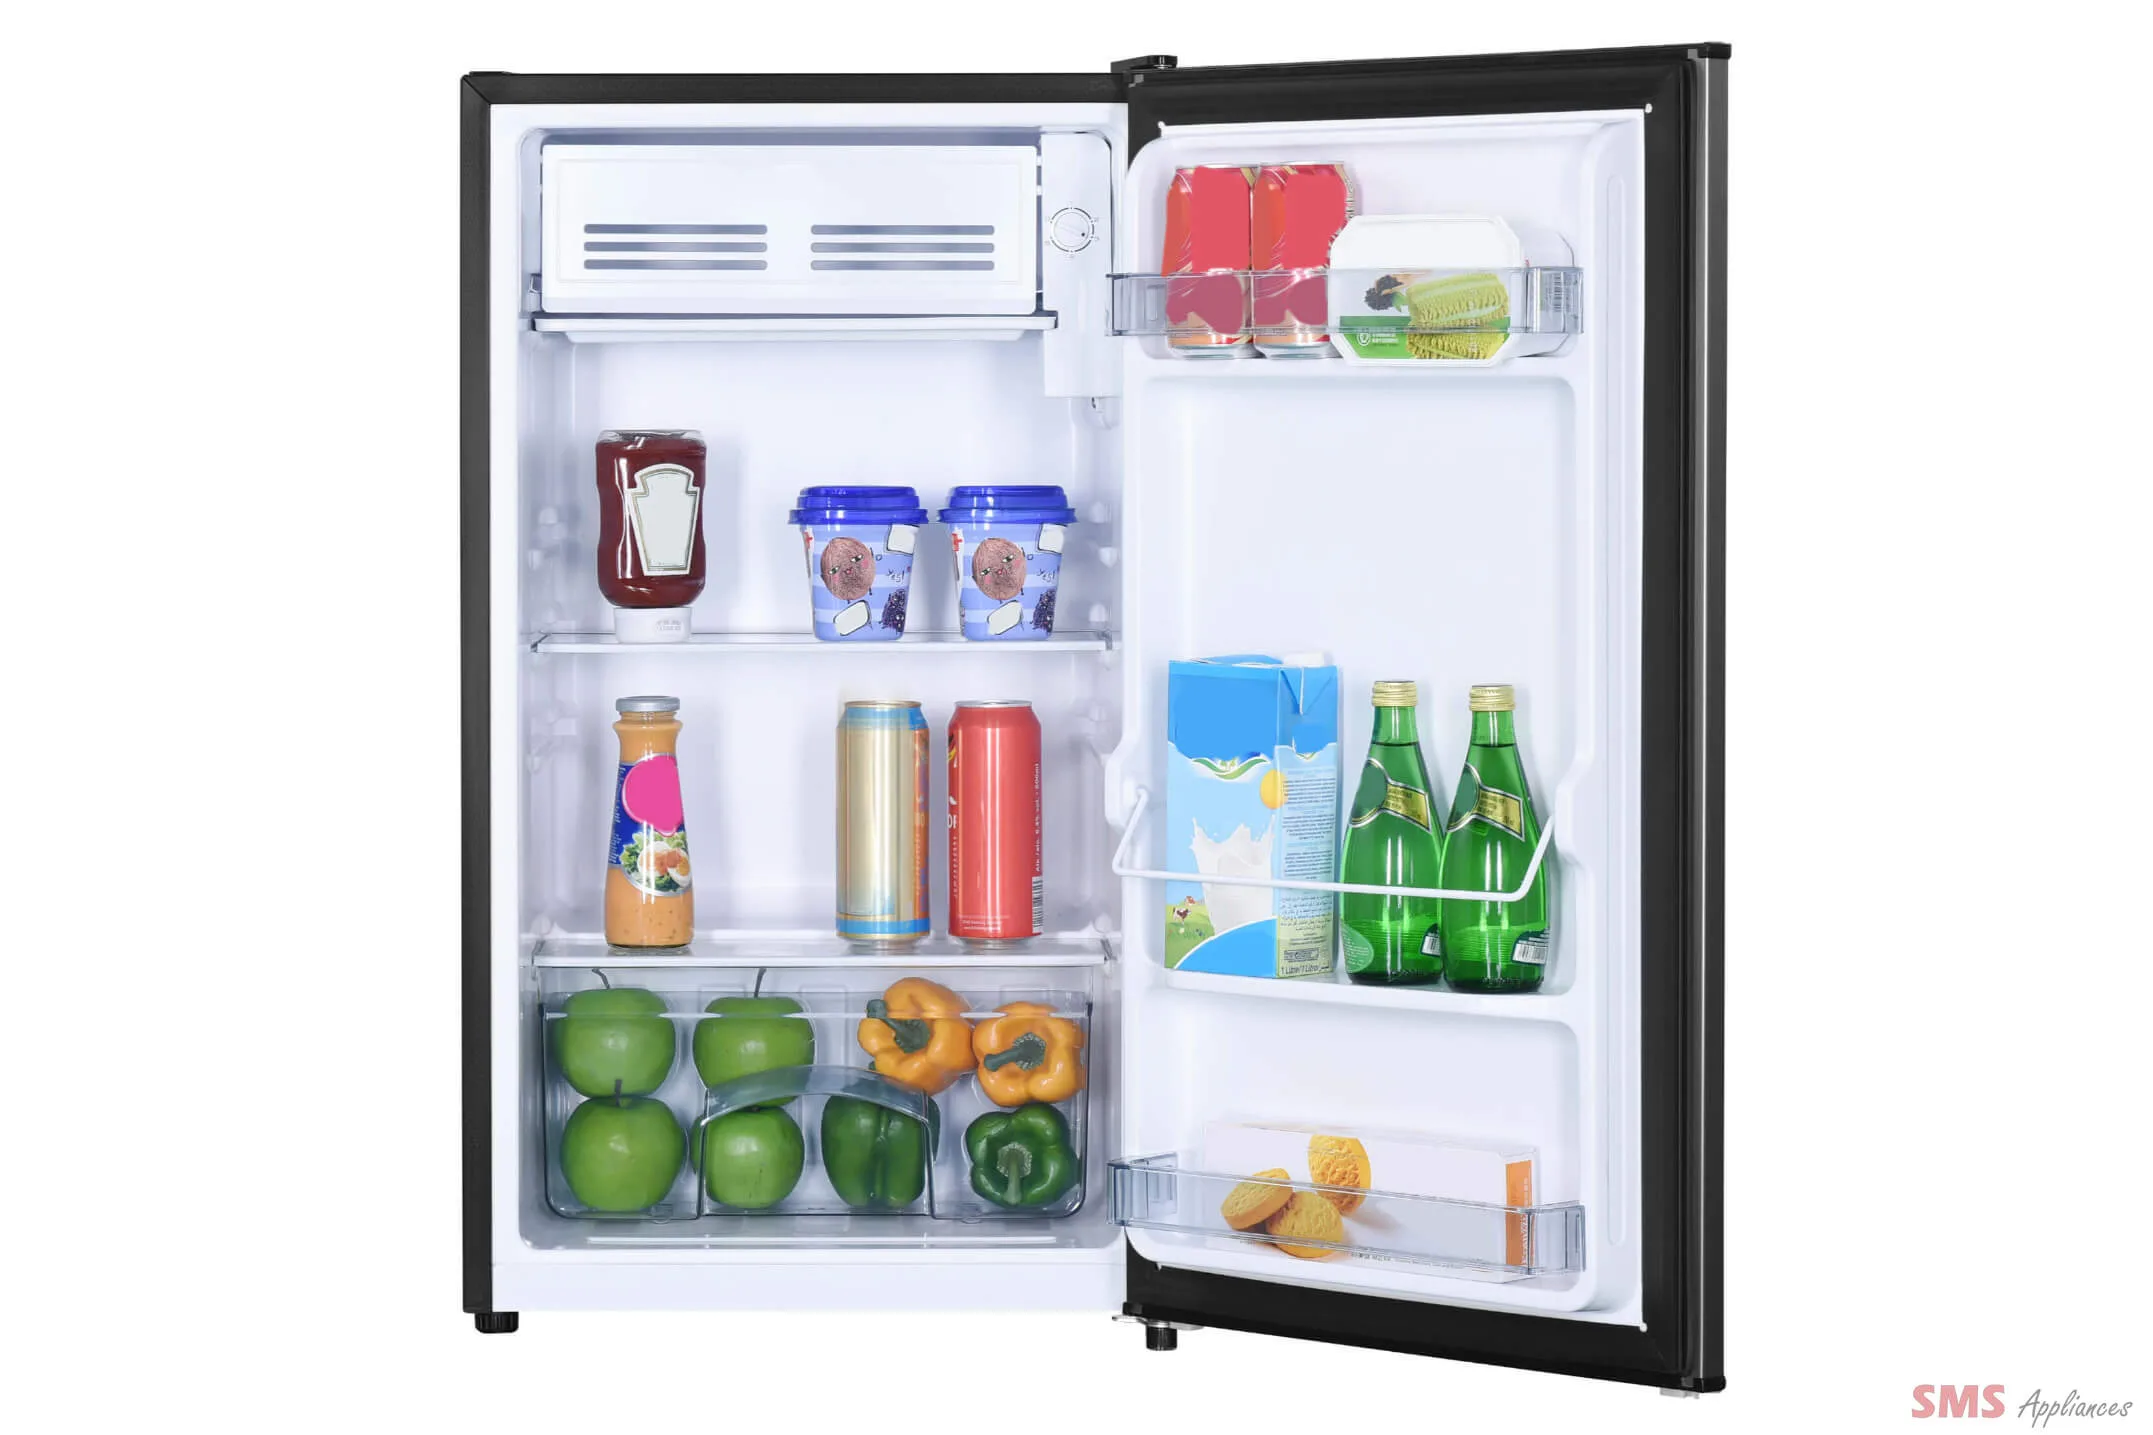 Danby Designer 3.1 Cu. ft. Compact Refrigerator